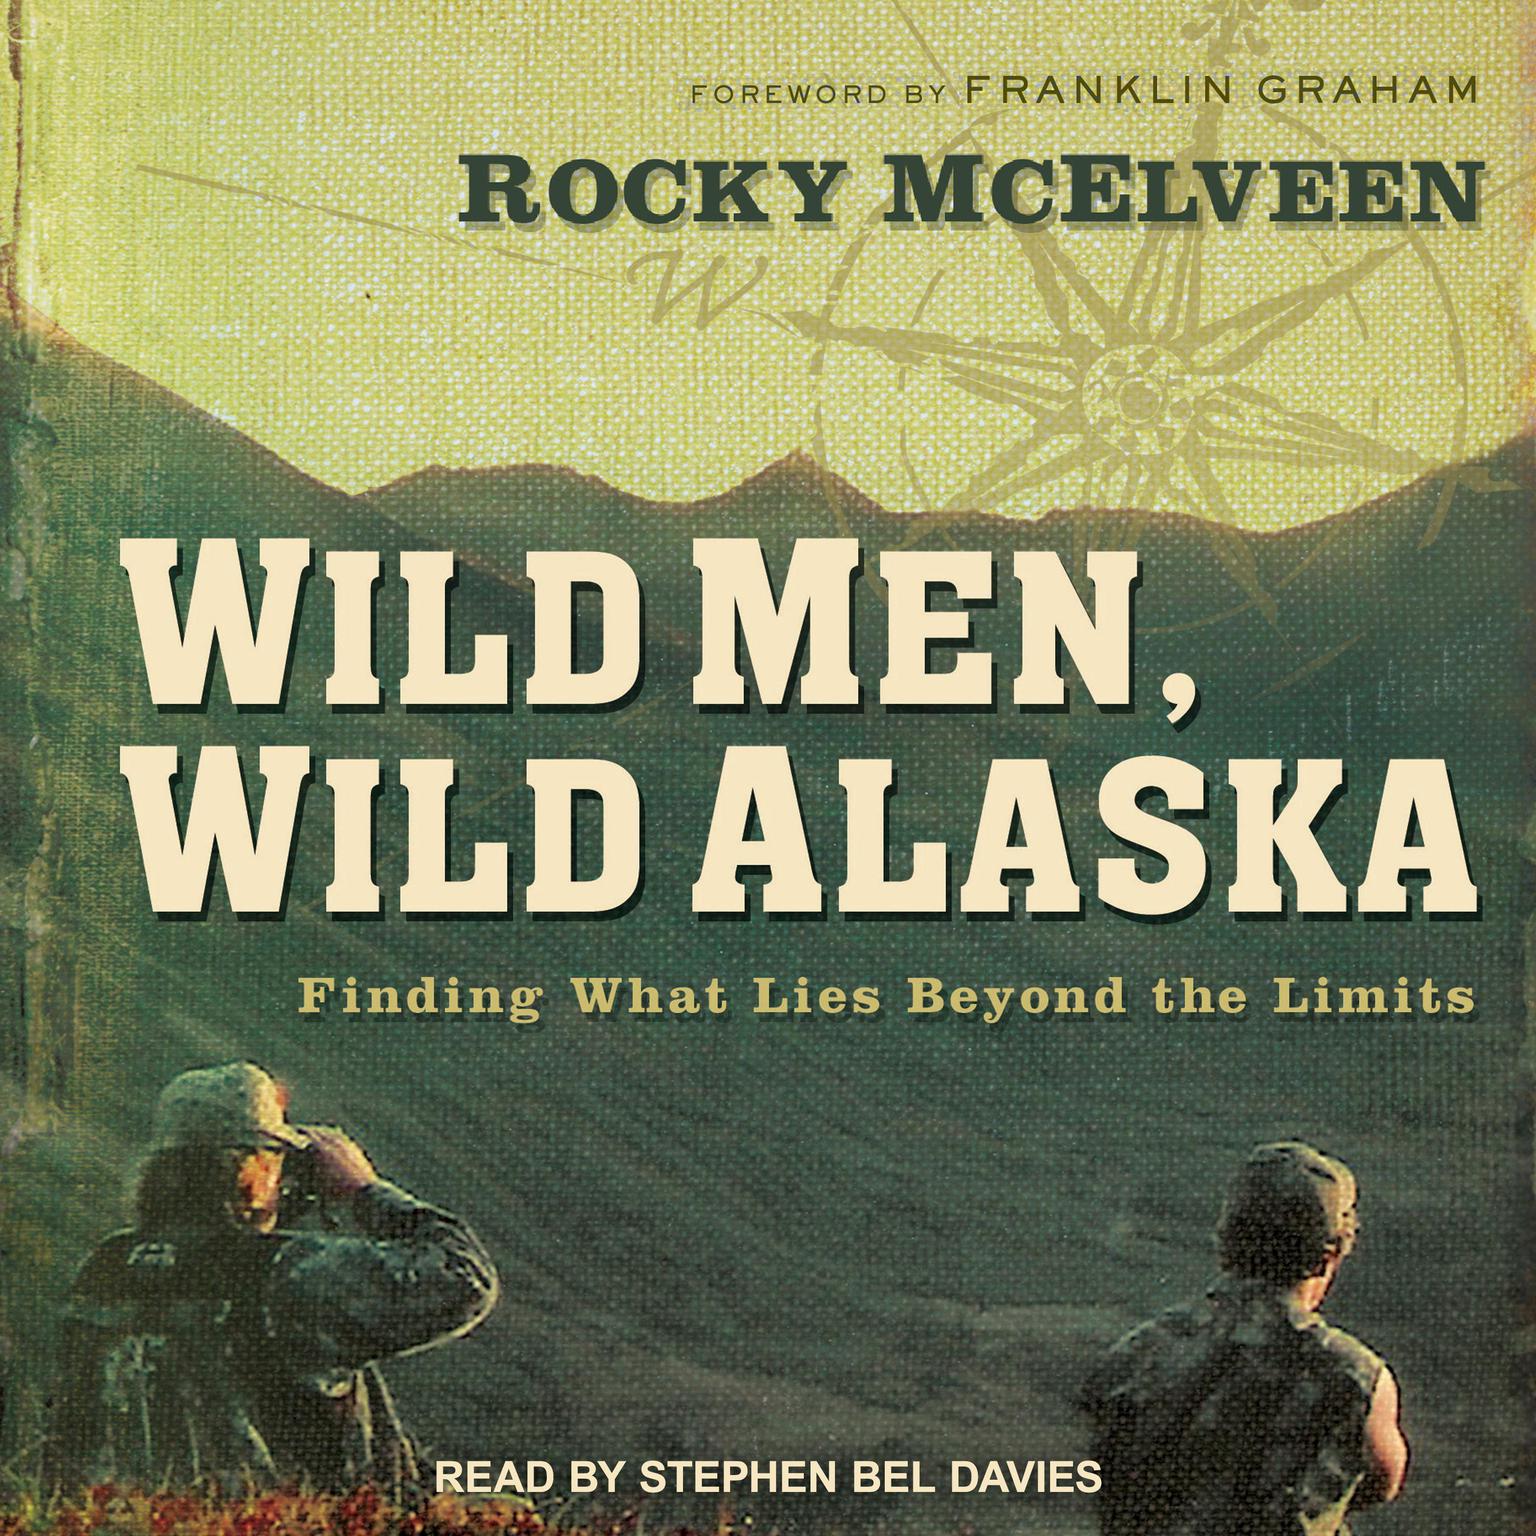 Wild Men, Wild Alaska: Finding What Lies Beyond the Limits Audiobook, by Rocky McElveen